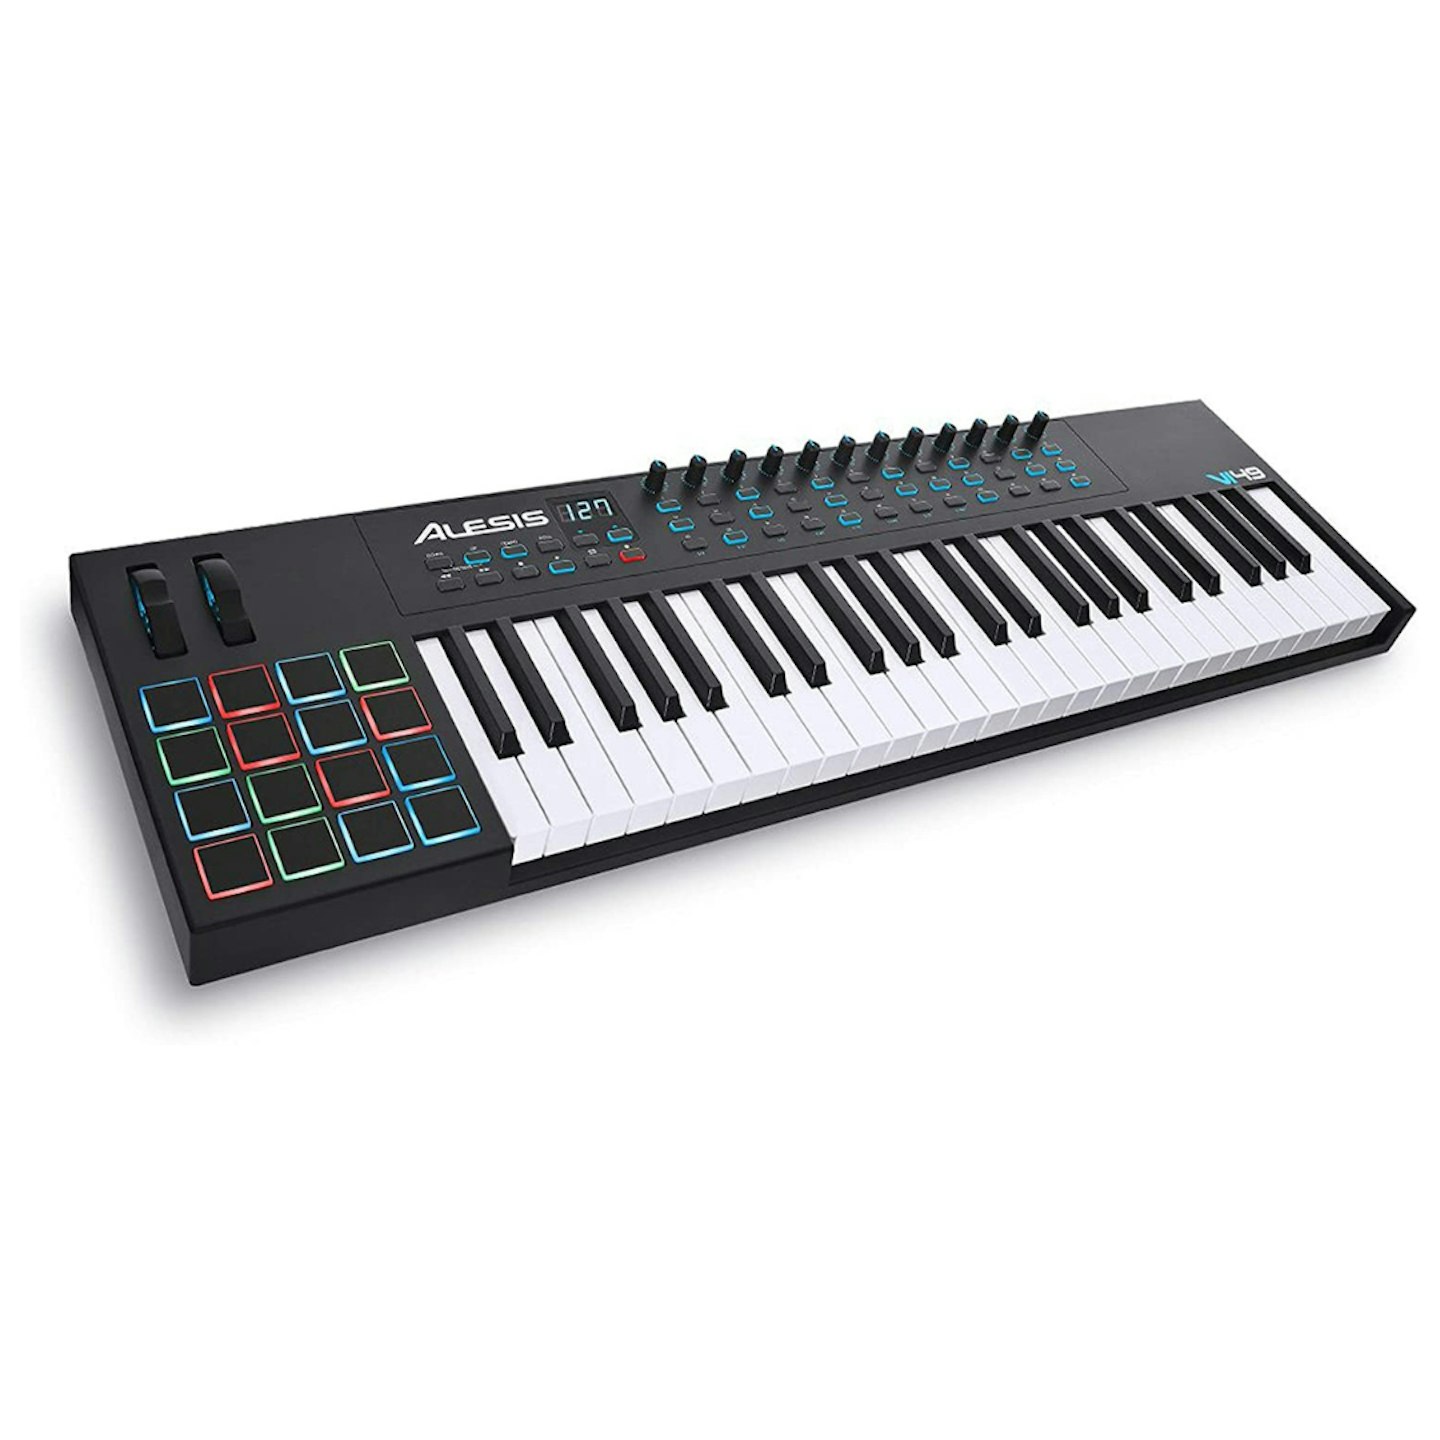 Alesis VI49 MIDI Keyboard for digital audio workstations